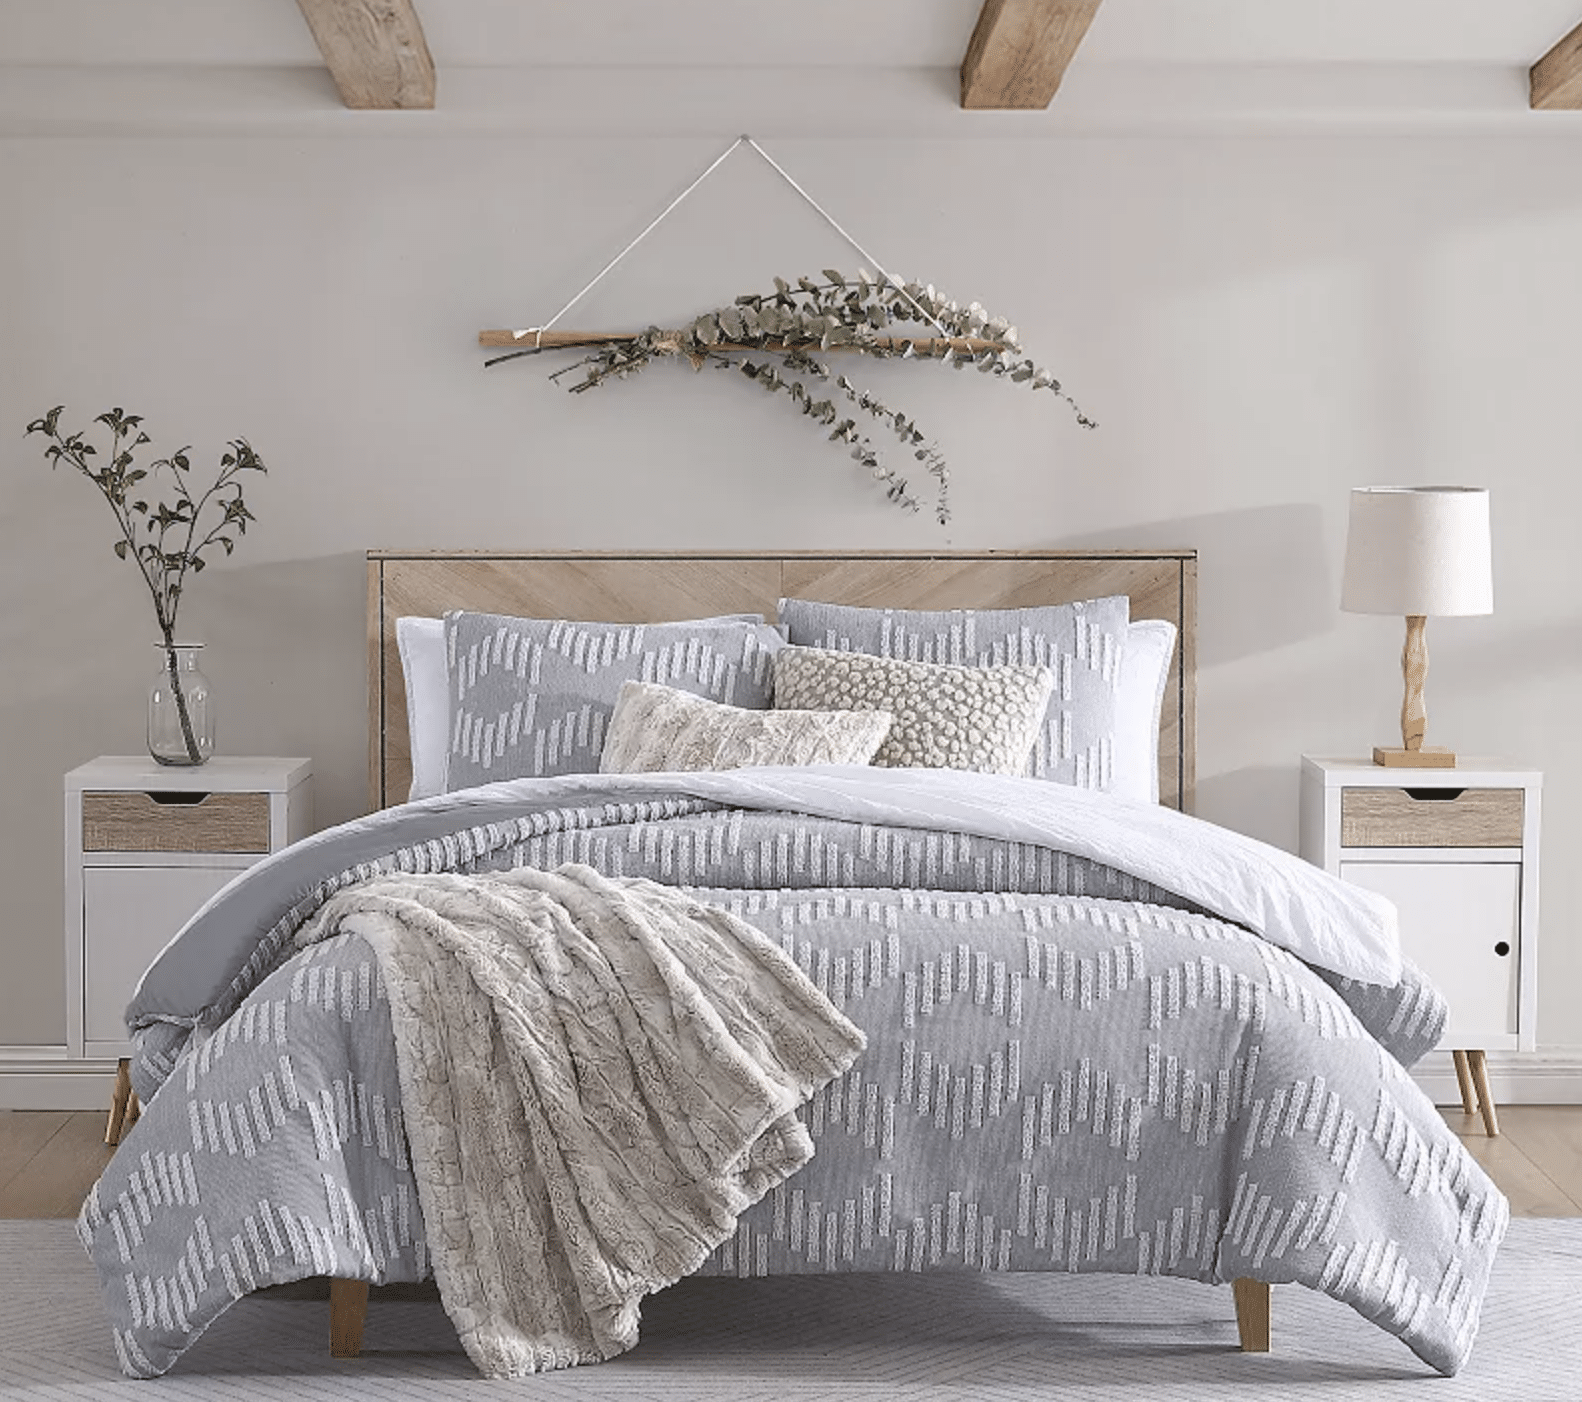 Koolaburra by Ugg Parkes Comforter Set